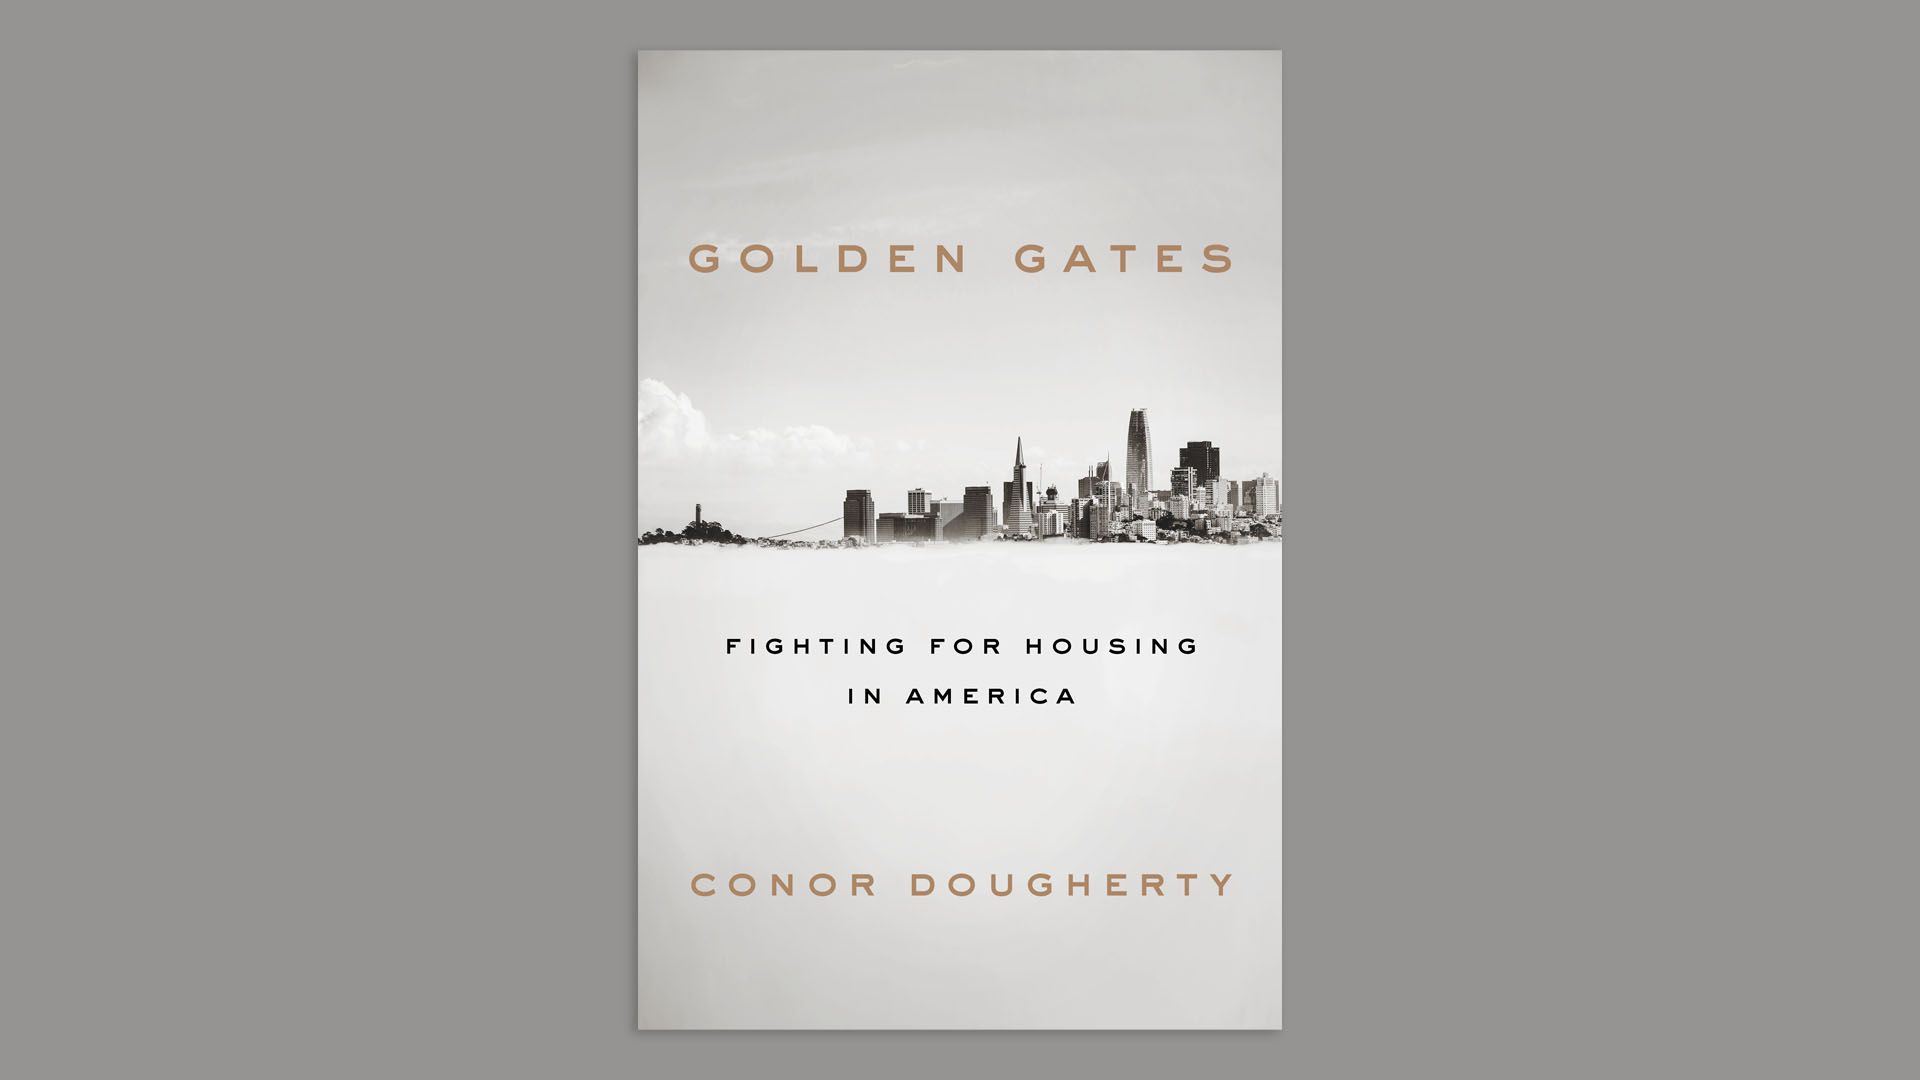 Golden Gates, by Conor Dougherty